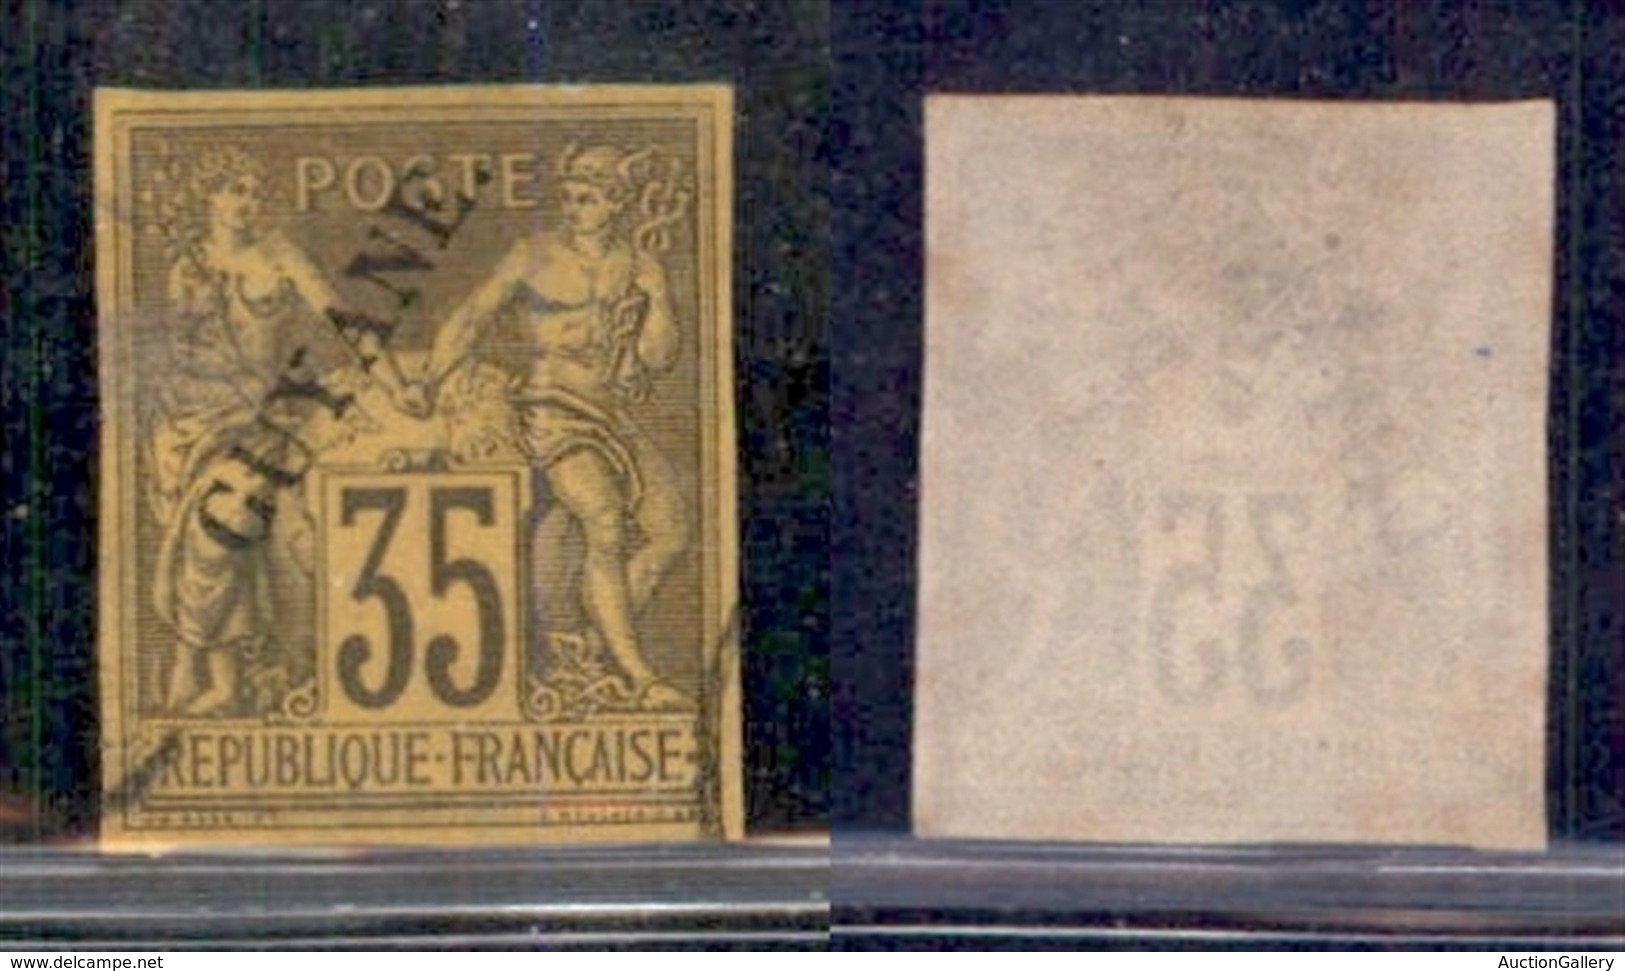 OLTREMARE - GUIANA FRANCESE - 1892 - 35 Cent (12) Usato - Lieve Imperfezione Al Recto (a Sinistra Di UY) - Other & Unclassified